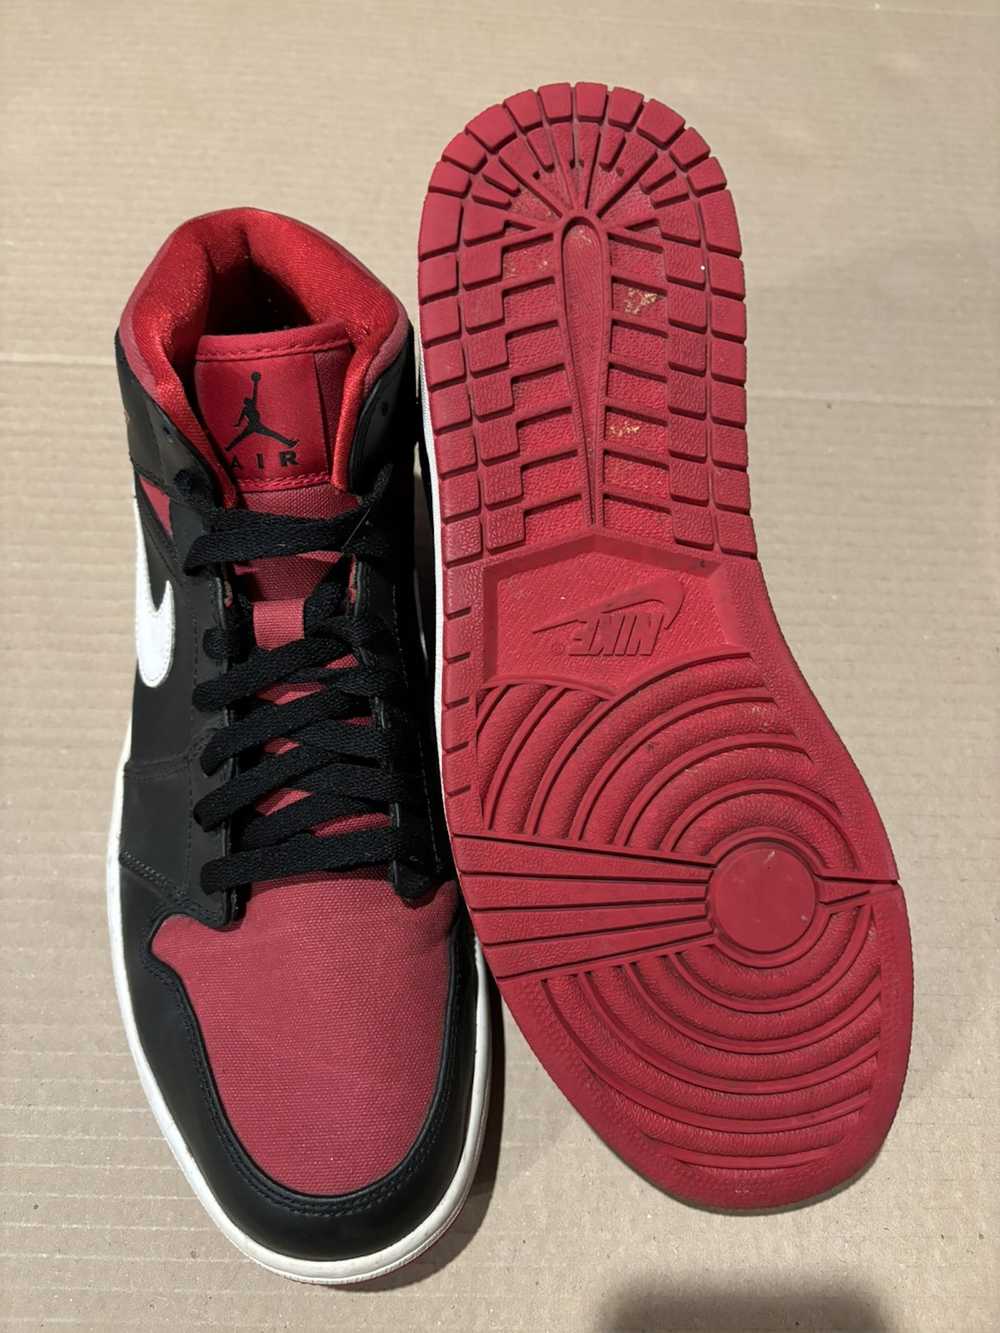 Jordan Brand × Nike Air Jordan 1 mid Black Gym Red - image 4